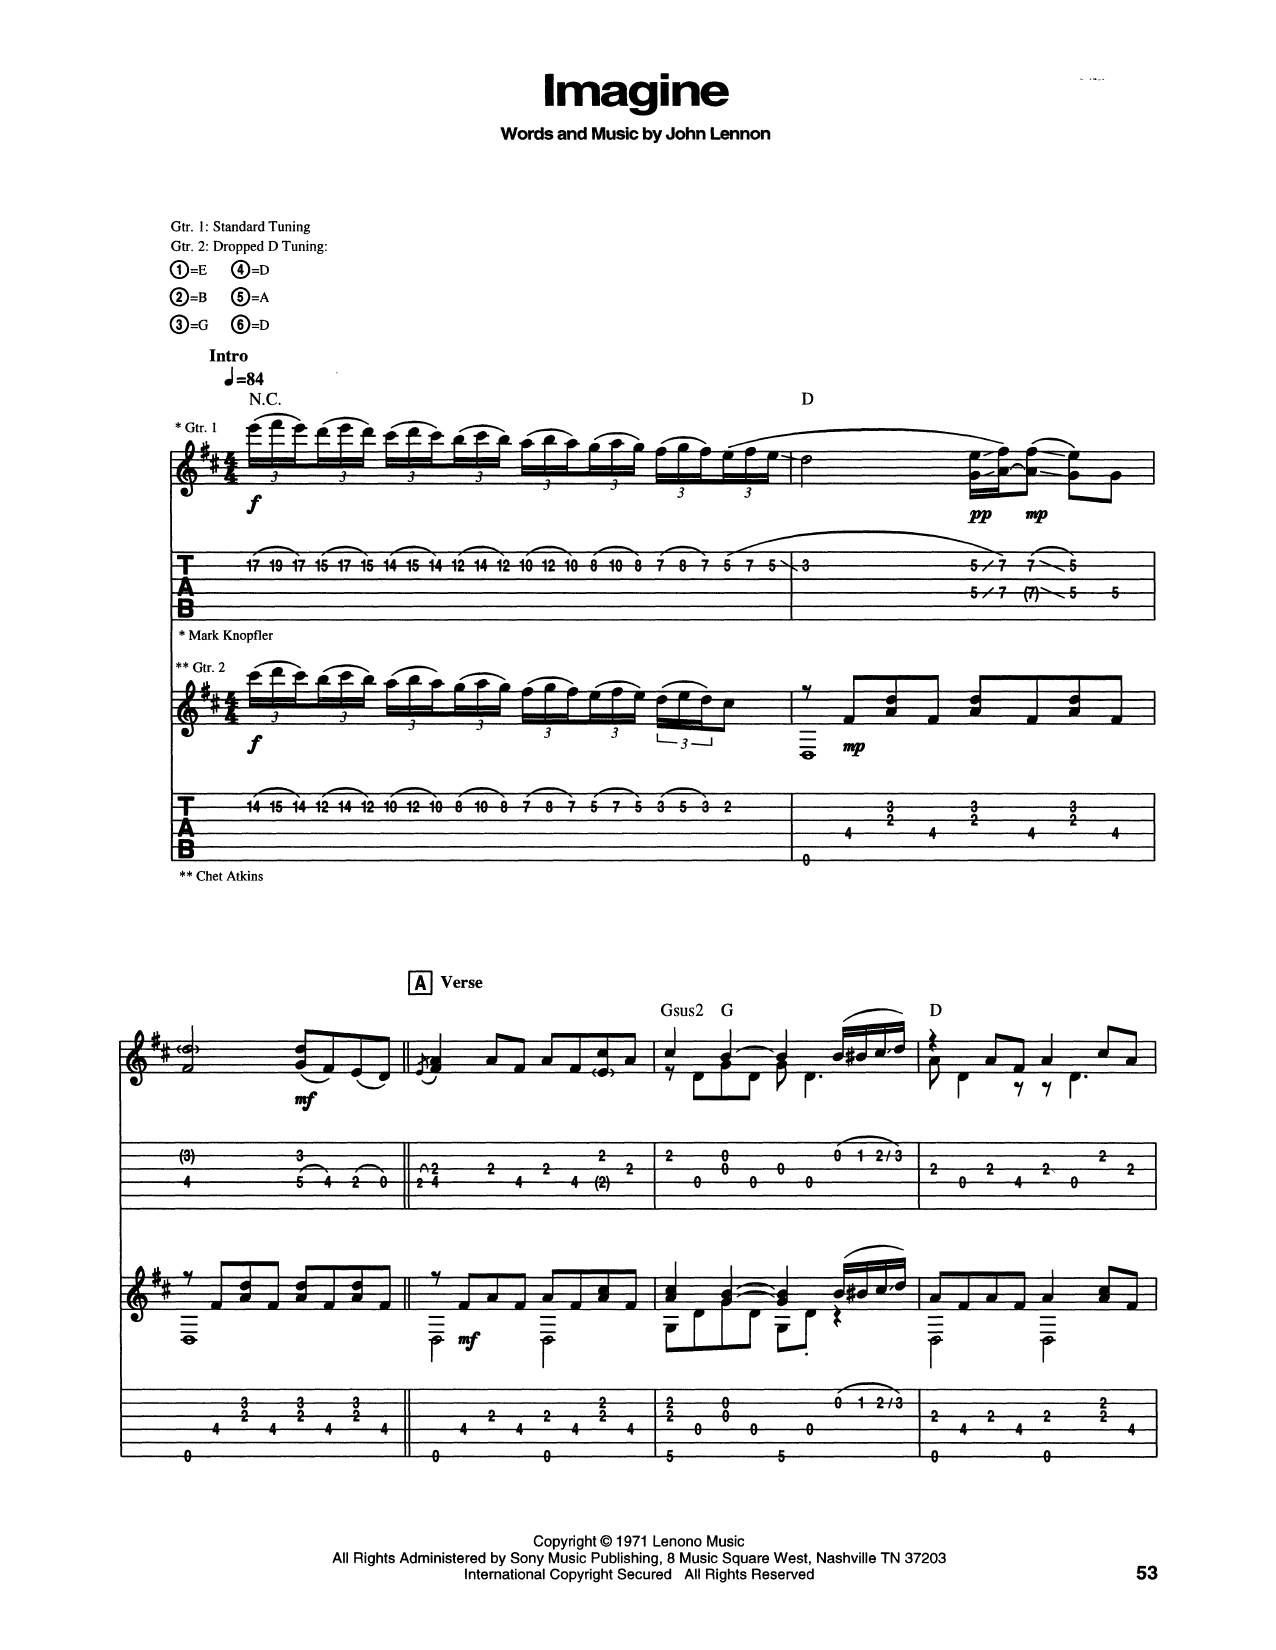 Download Chet Atkins Imagine Sheet Music